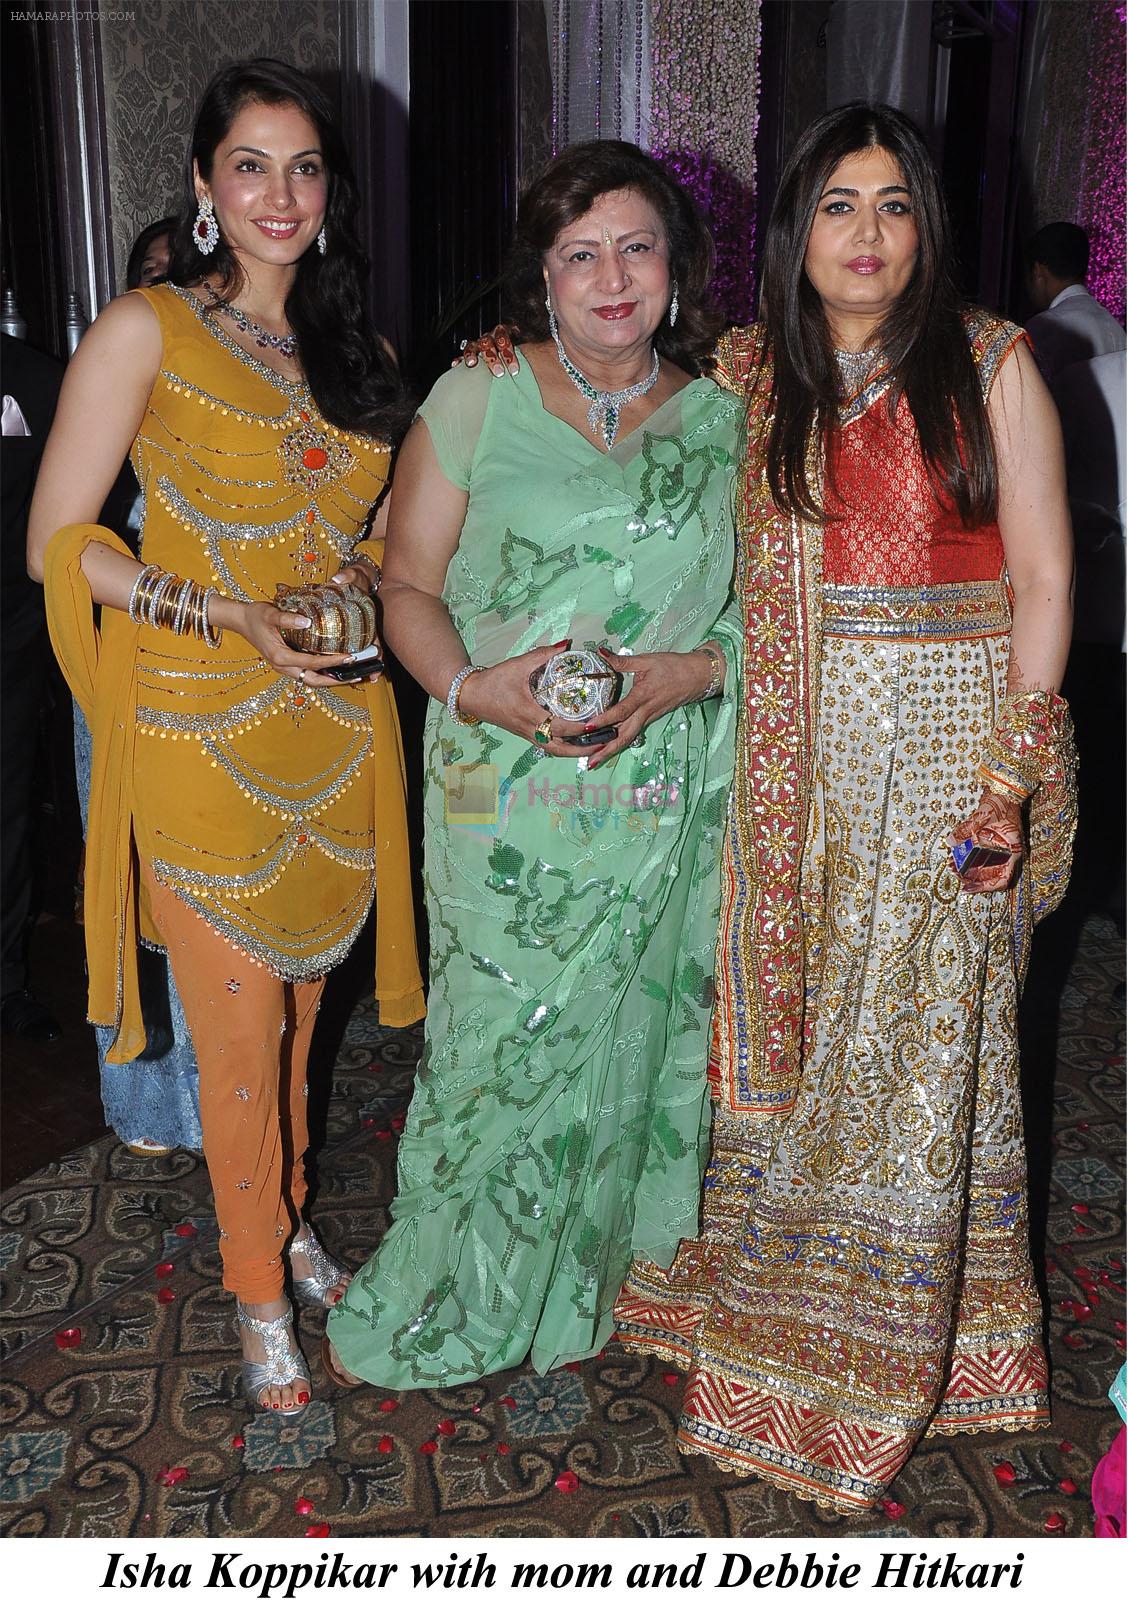 Isha Koppikar with mom and Debbie Hitkari at the Engagement ceremony of Arjun Hitkari with Gayatri on 19th April 2012